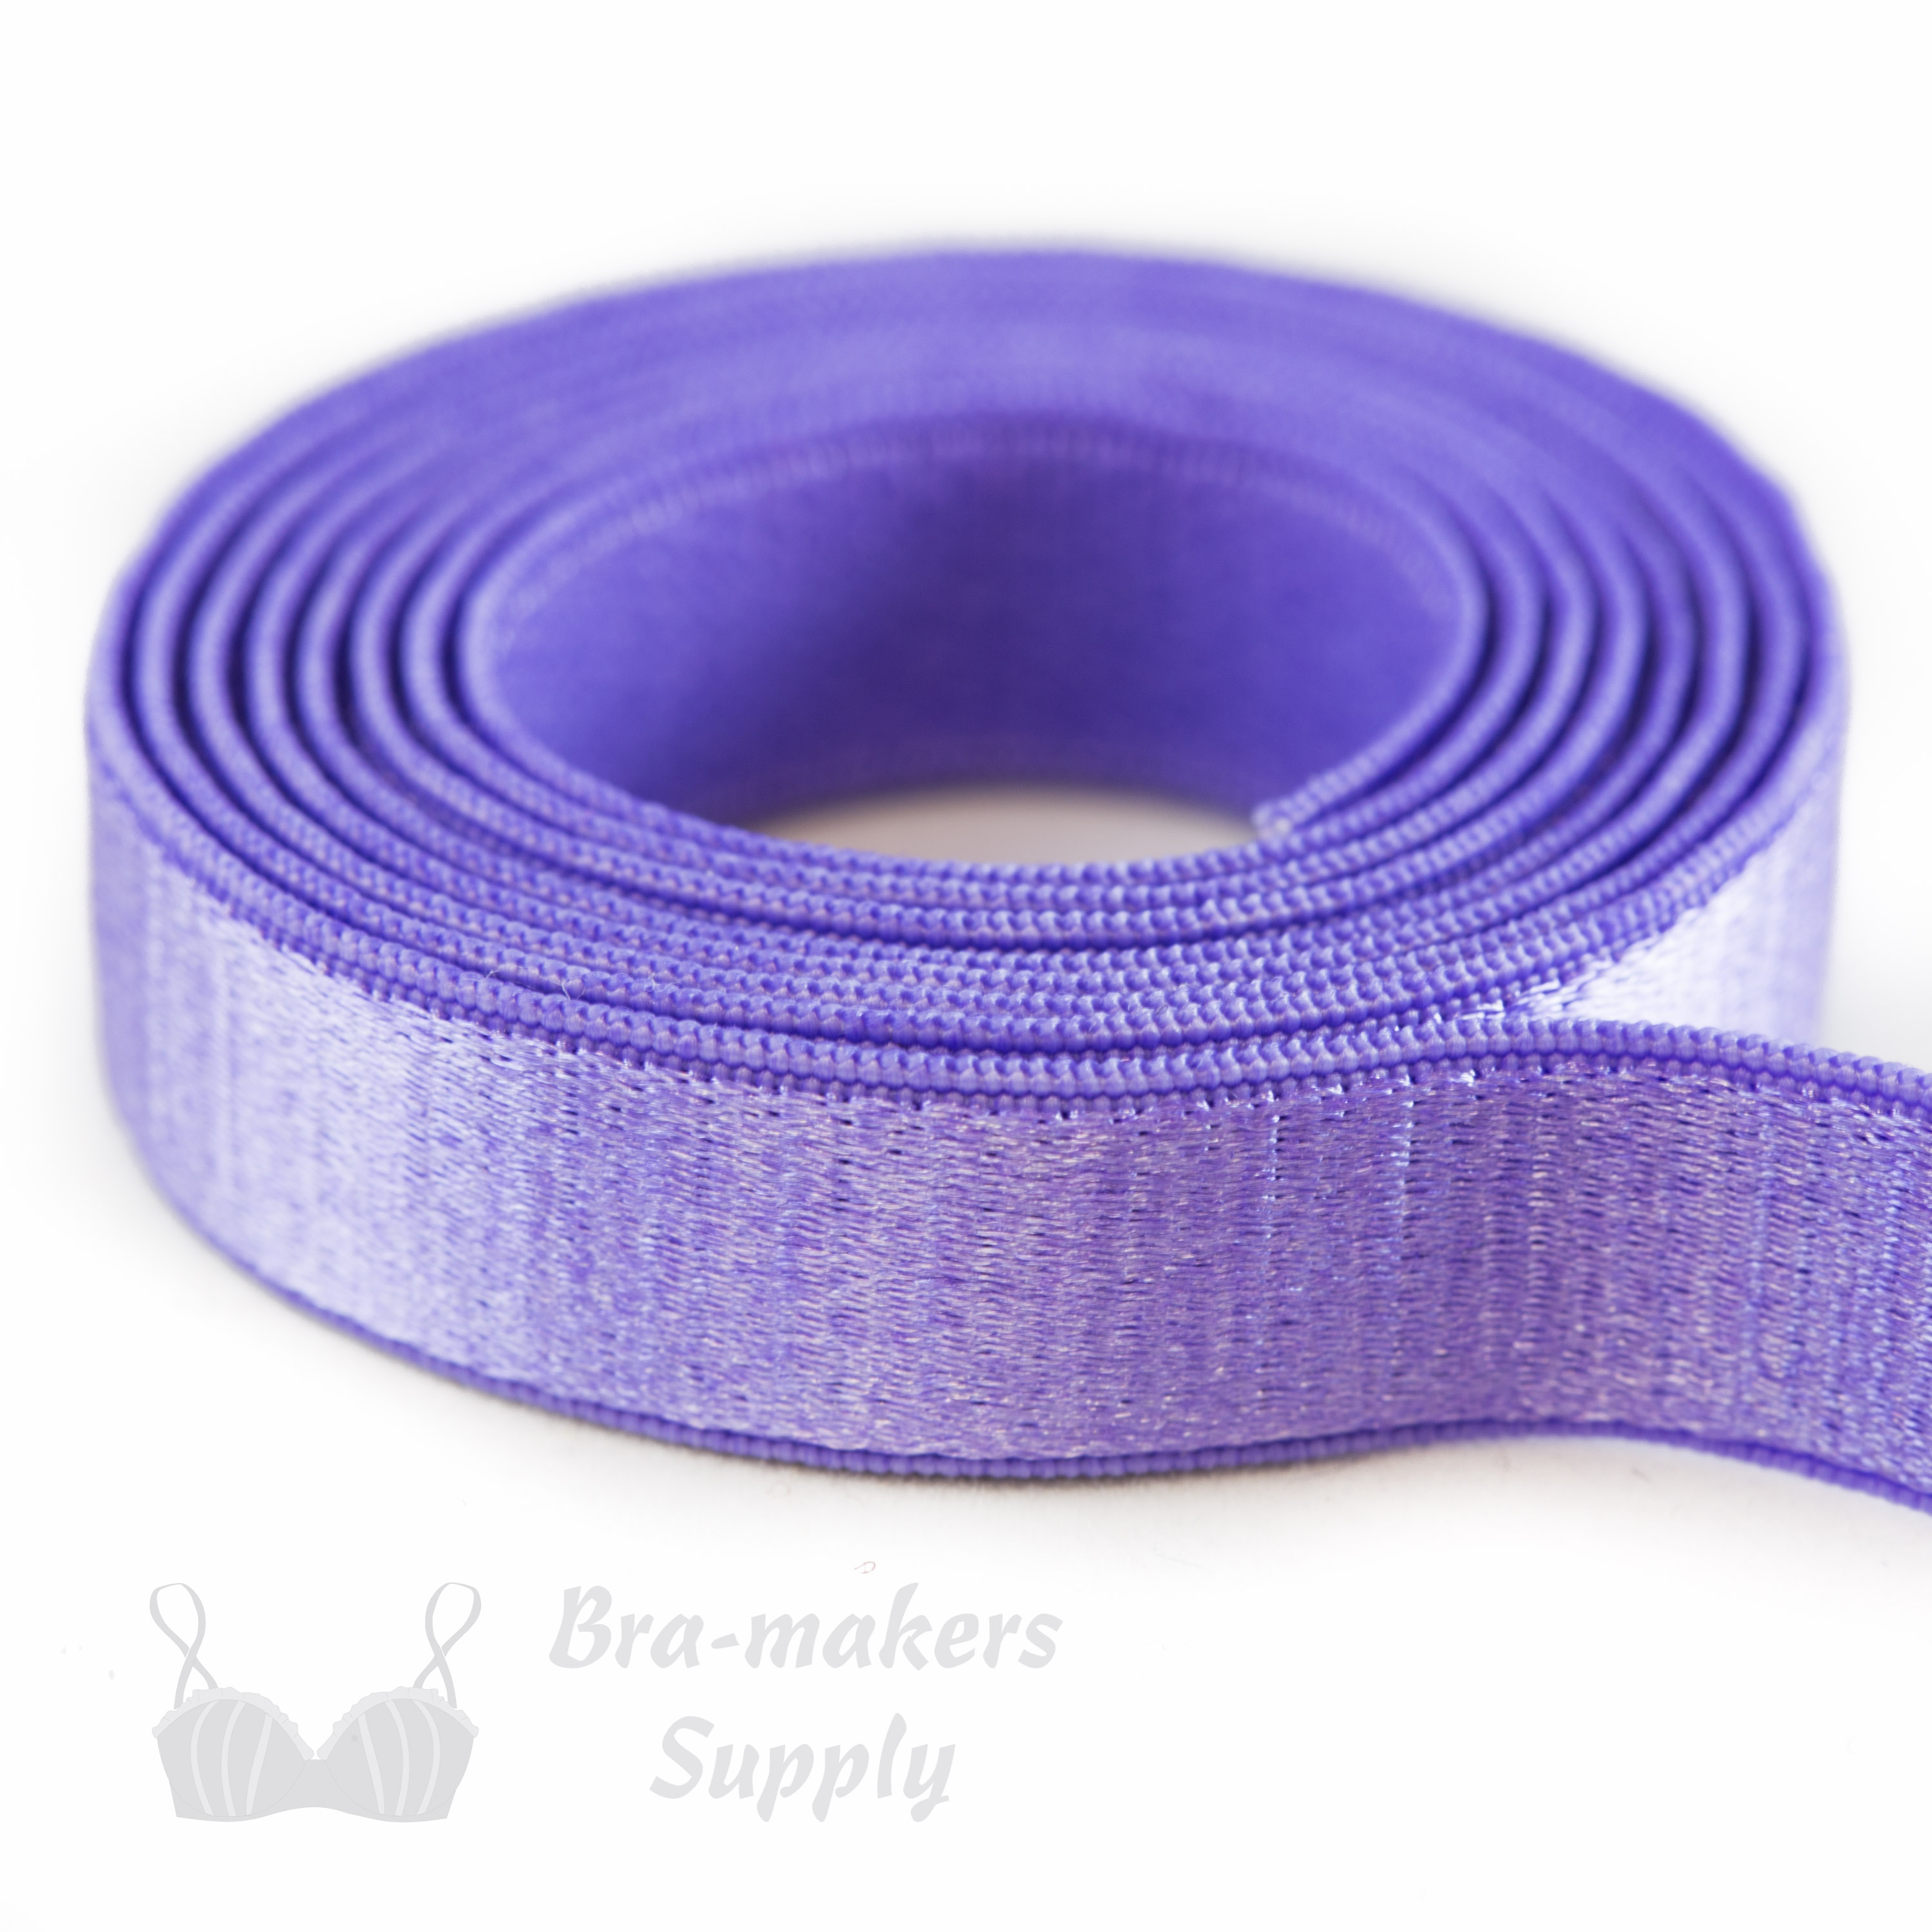 half inch 12mm Strap Elastic lilac ES-4 or half inch 12mm Satin Strap Elastic dahlia purple Pantone 17-3834 from Bra-makers Supply 1 metre roll shown